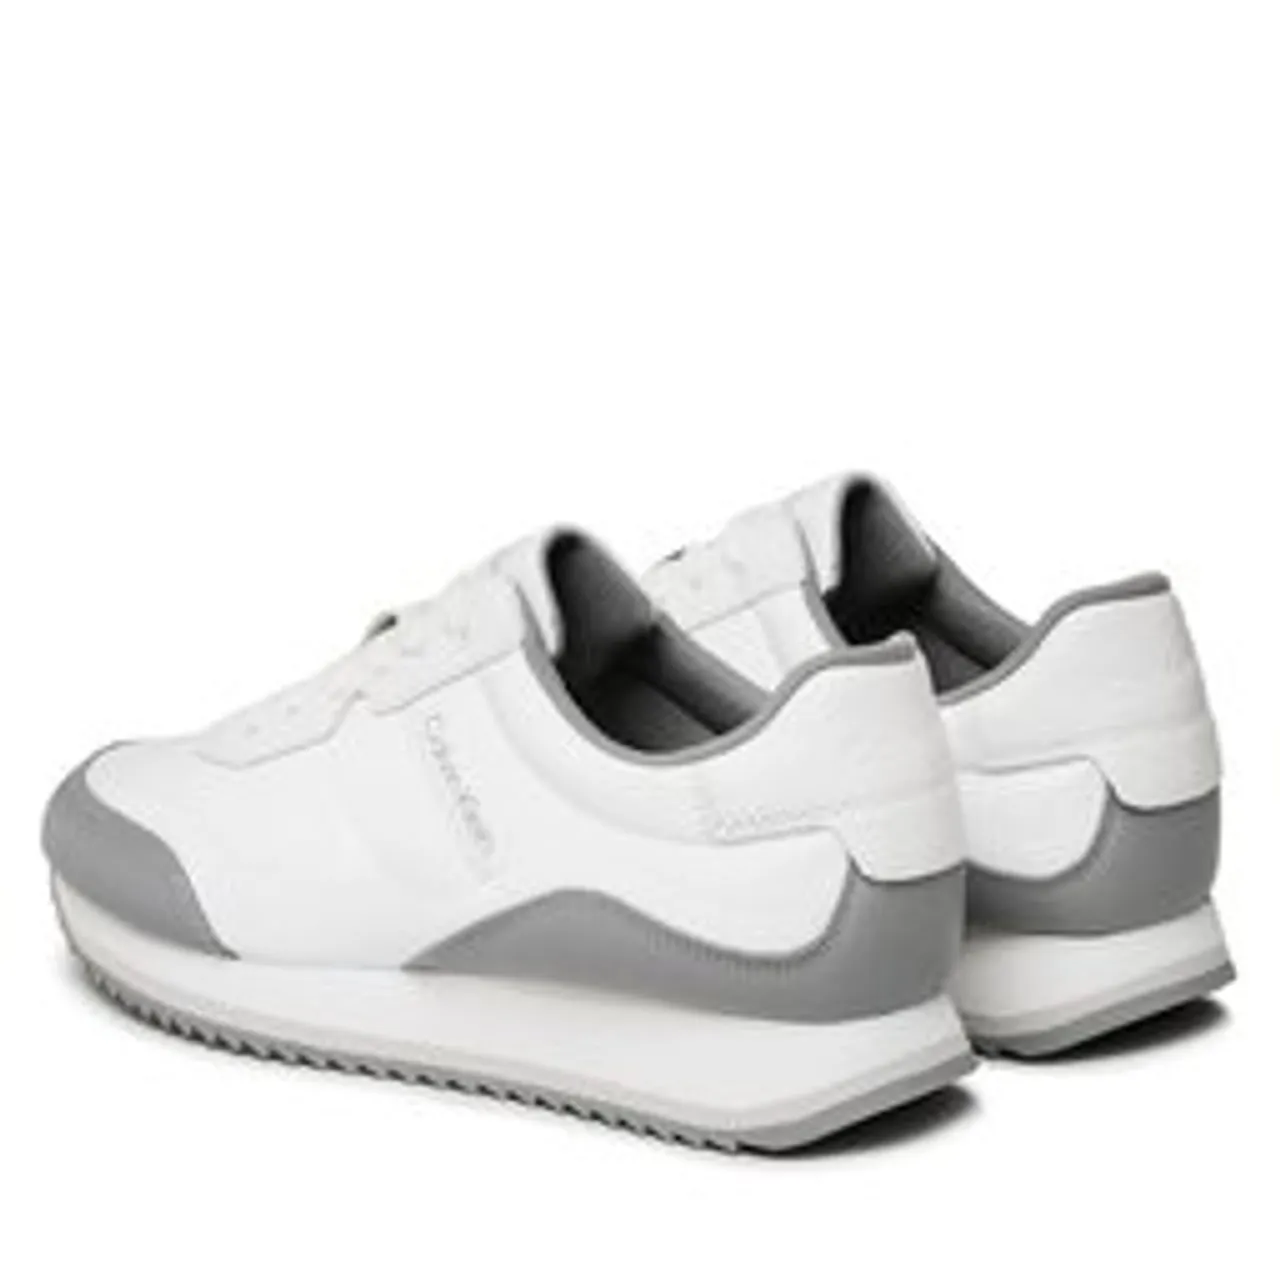 Sneakers Calvin Klein Low Top Lace Up Heat Bond HM0HM00551 White/Granite Road 0K8